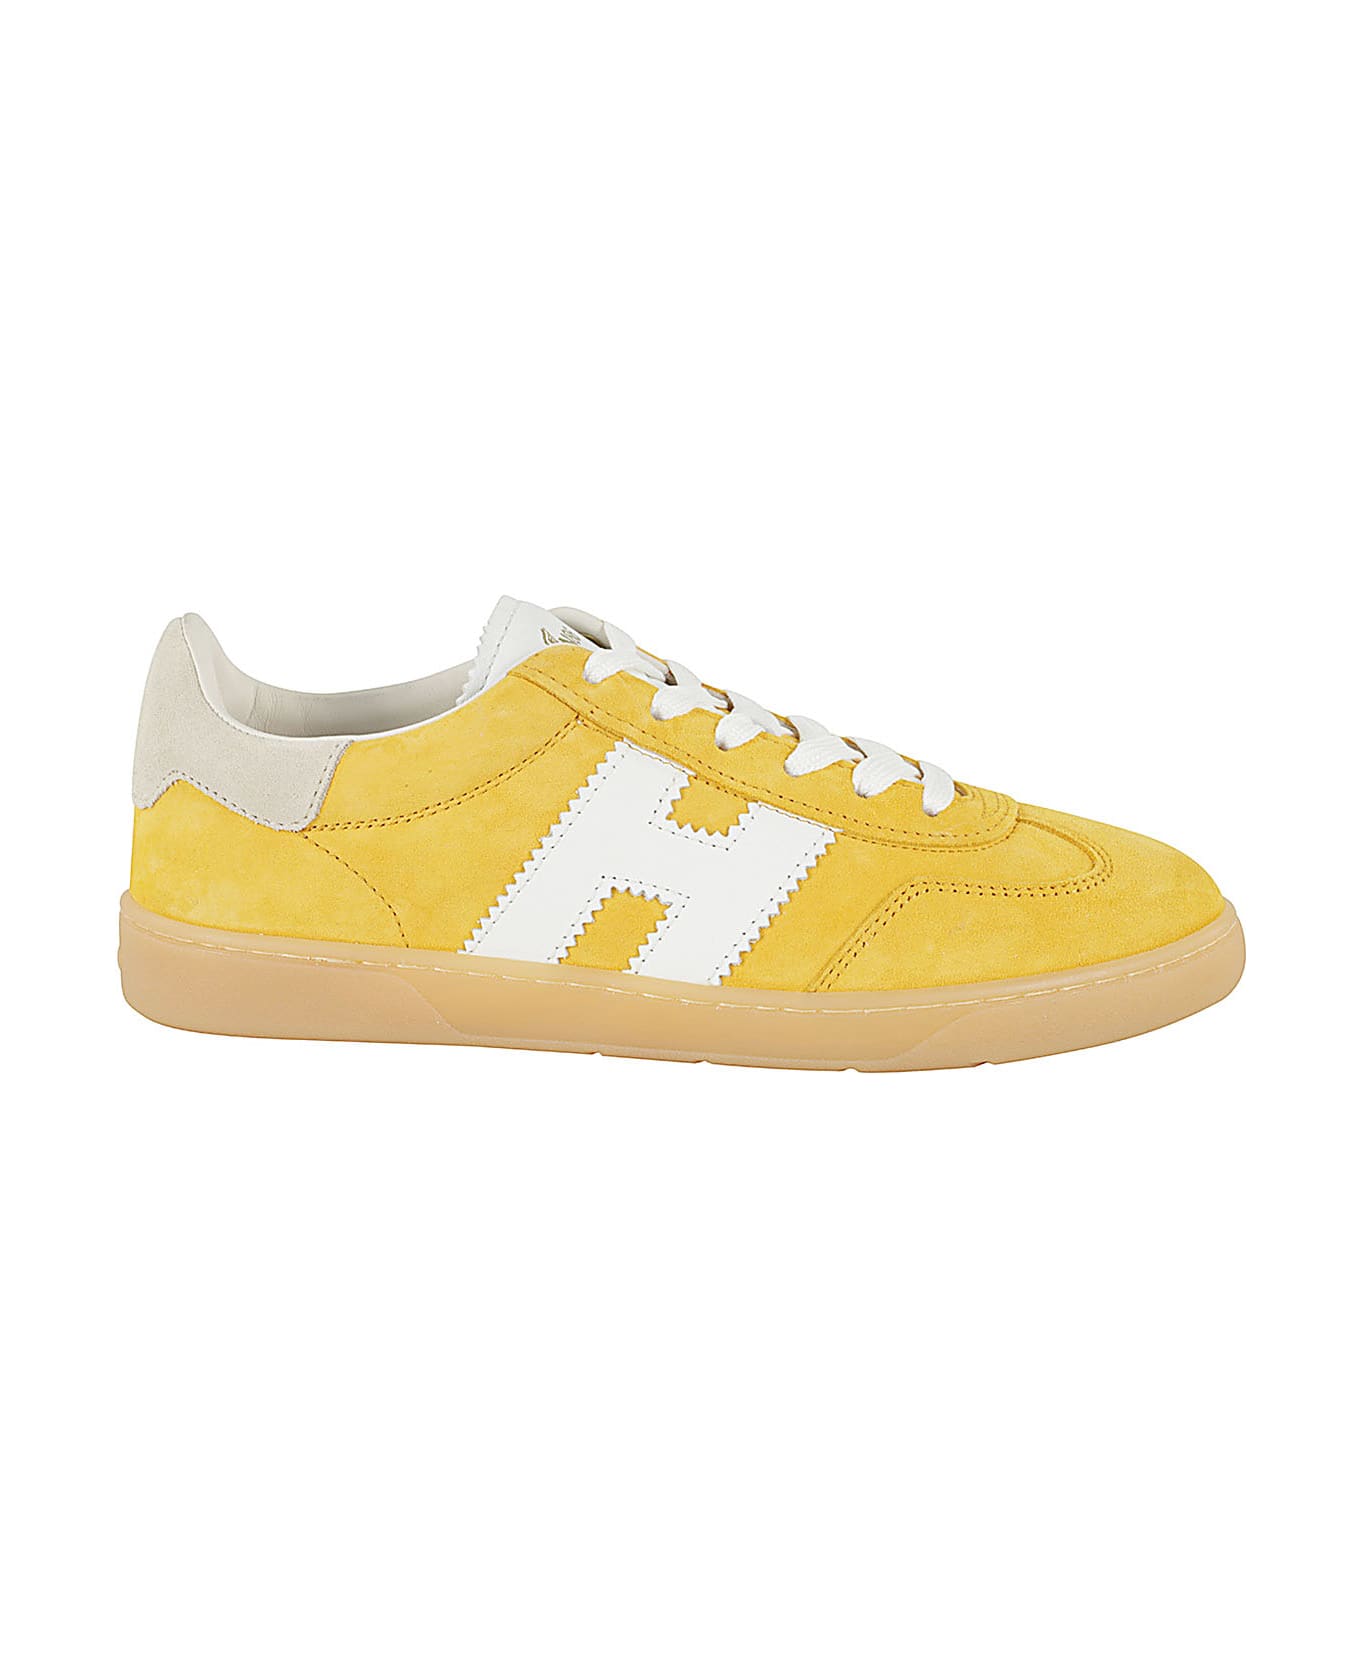 Hogan Cool Allacciato H Sneakers - Sole Caldo スニーカー